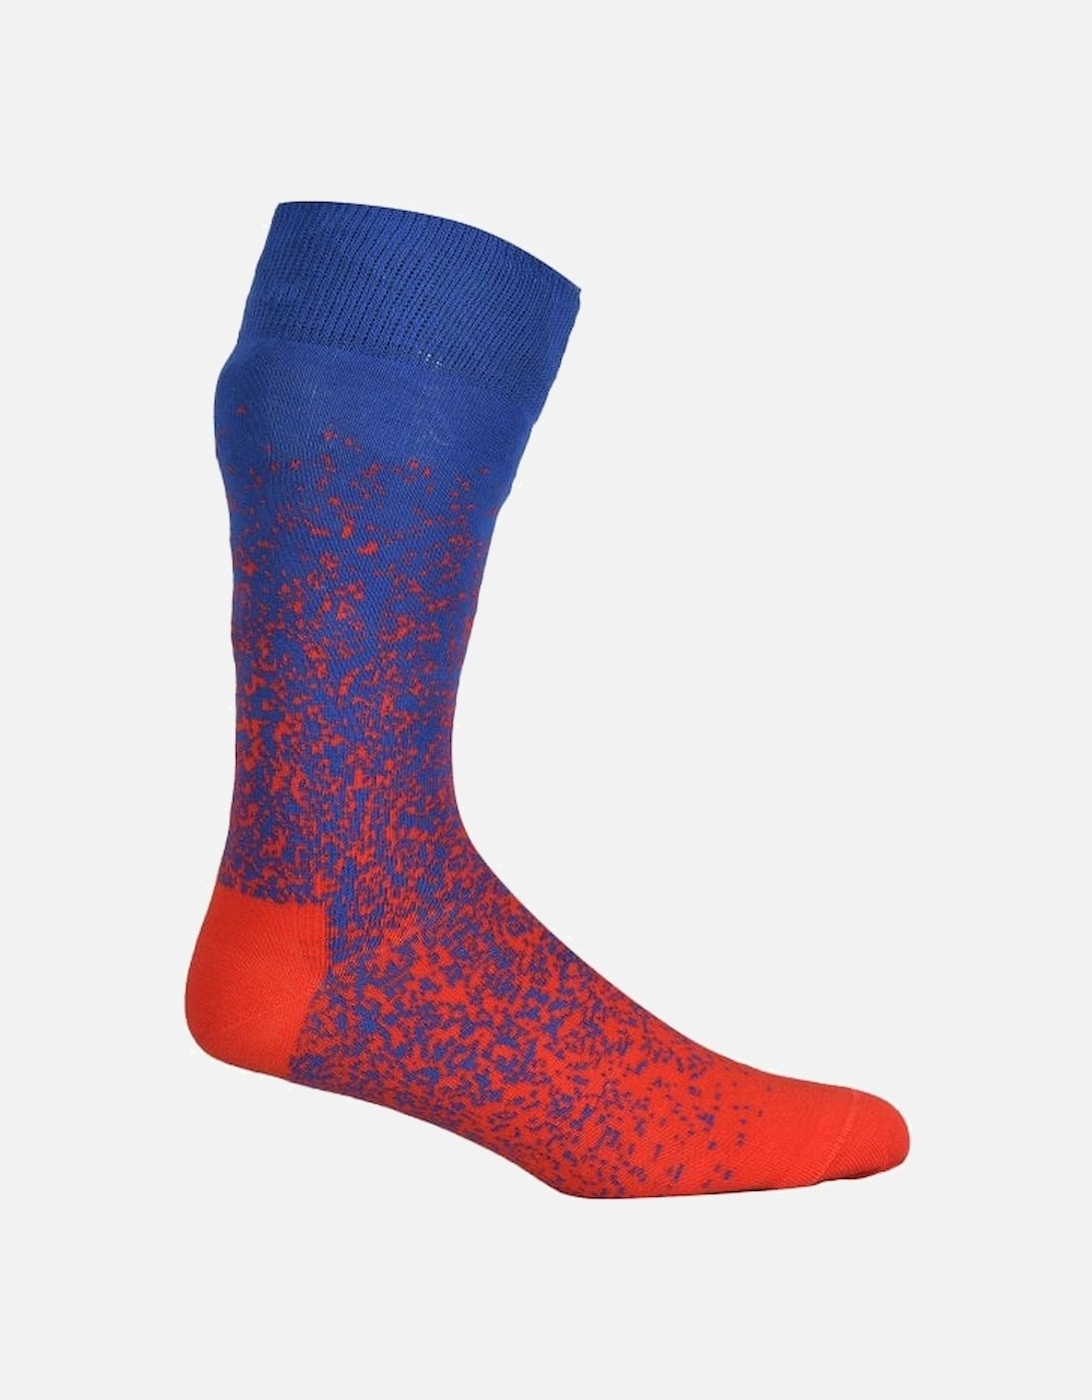 Stardust Socks, Blue/red